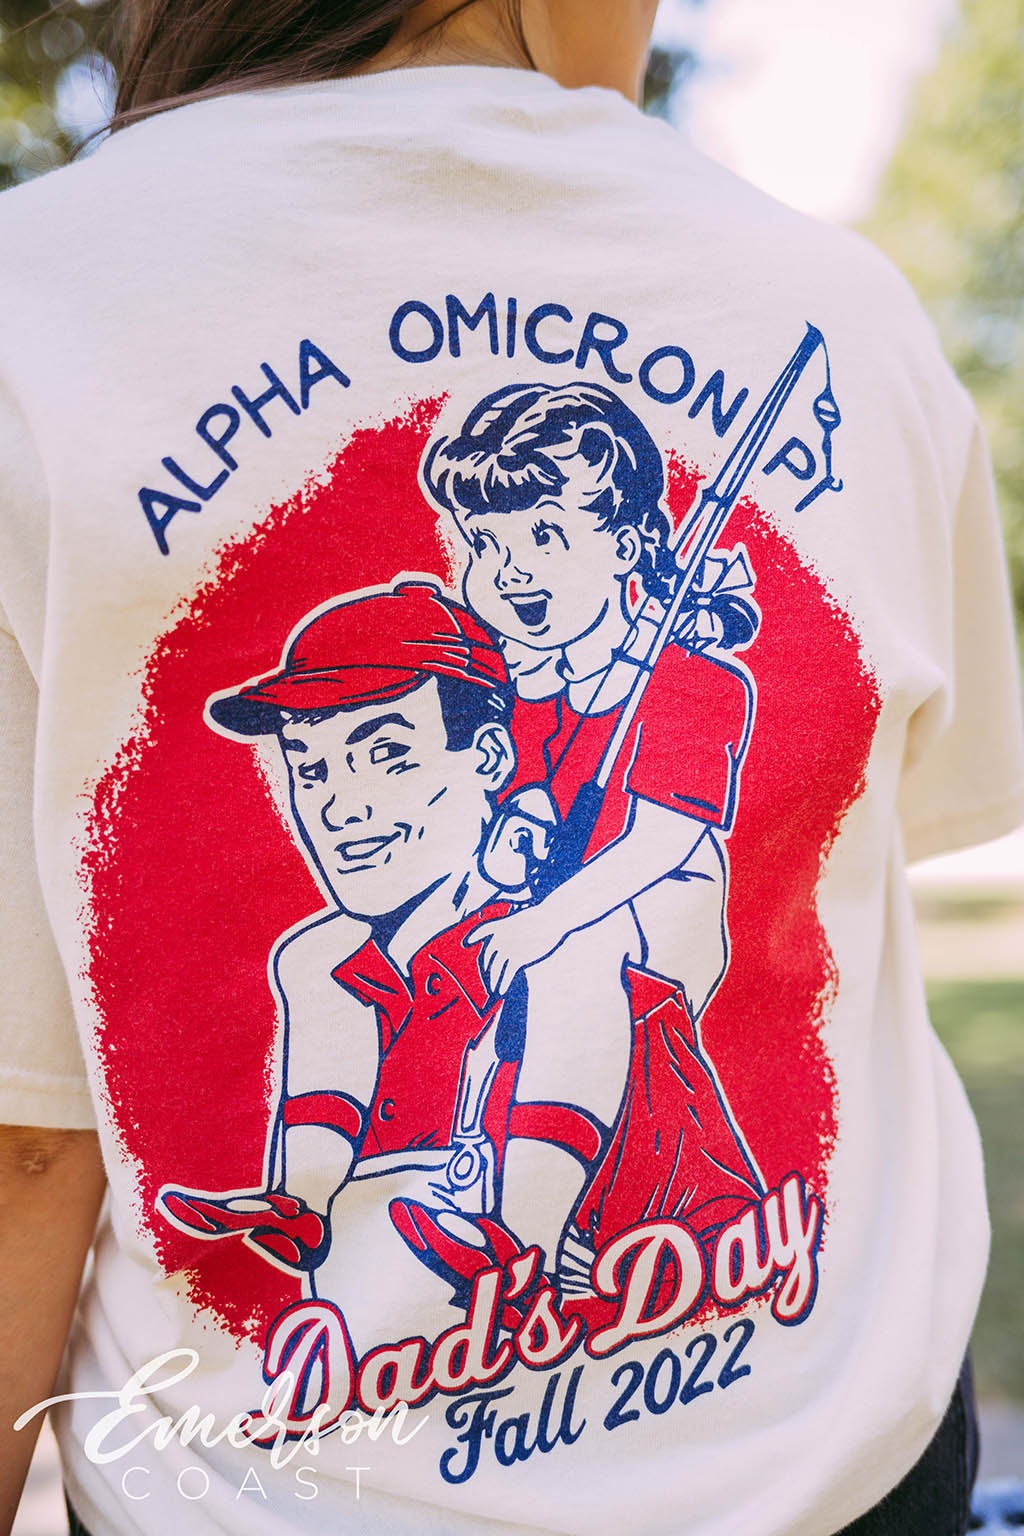 sorority Dad's Day tshirt designs — Emerson Coast  Sorority shirt designs,  School shirt designs, Sorority shirts